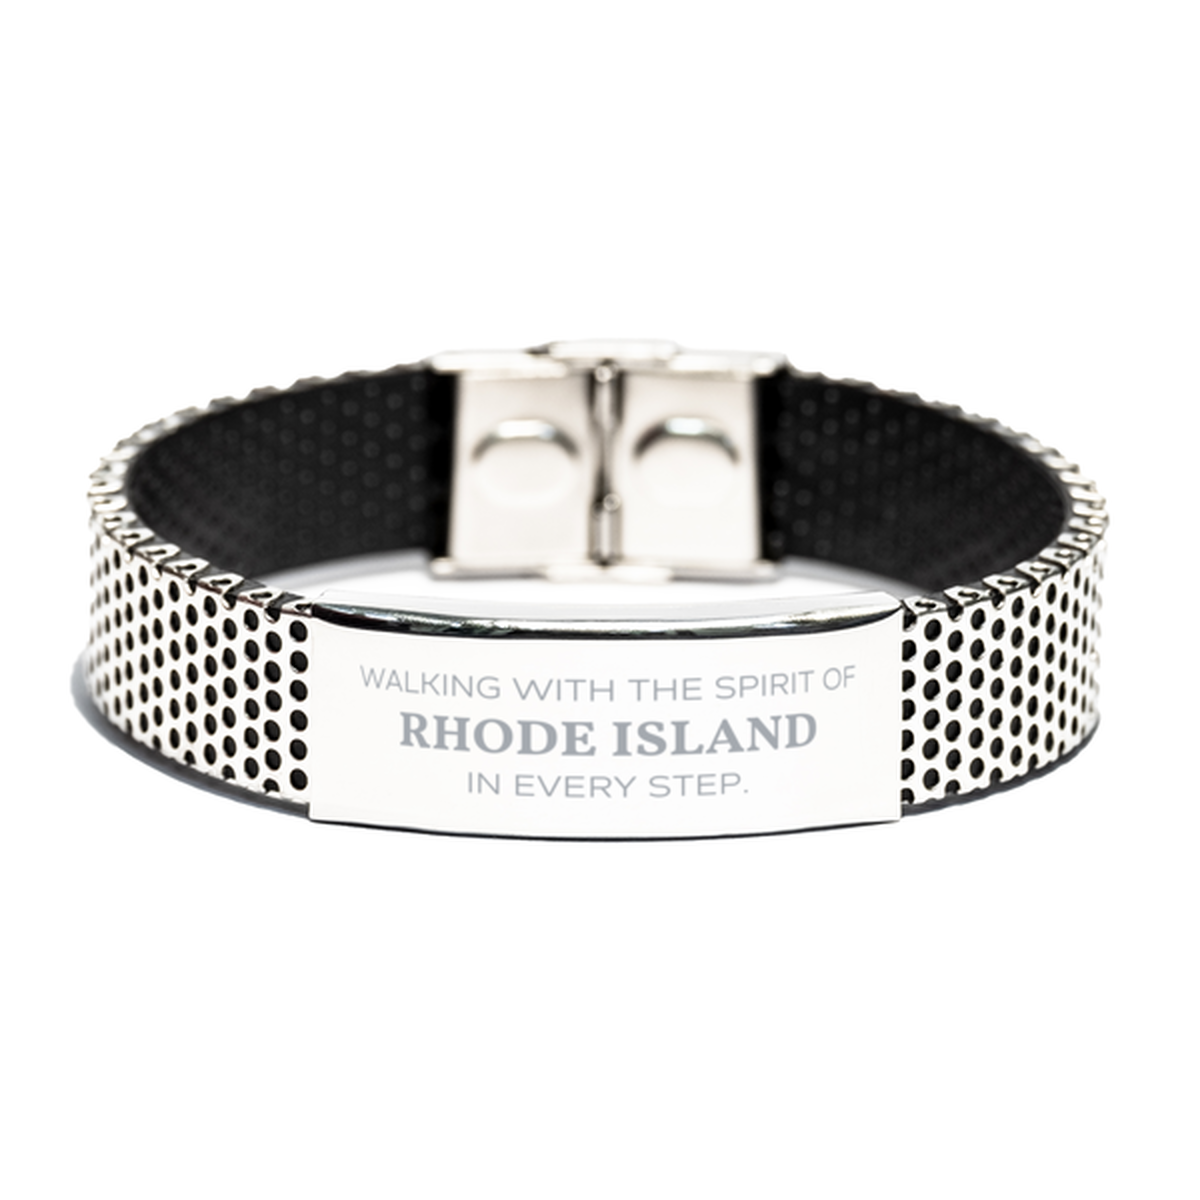 Rhode Island Gifts, Walking with the spirit, Love Rhode Island Birthday Christmas Stainless Steel Bracelet For Rhode Island People, Men, Women, Friends